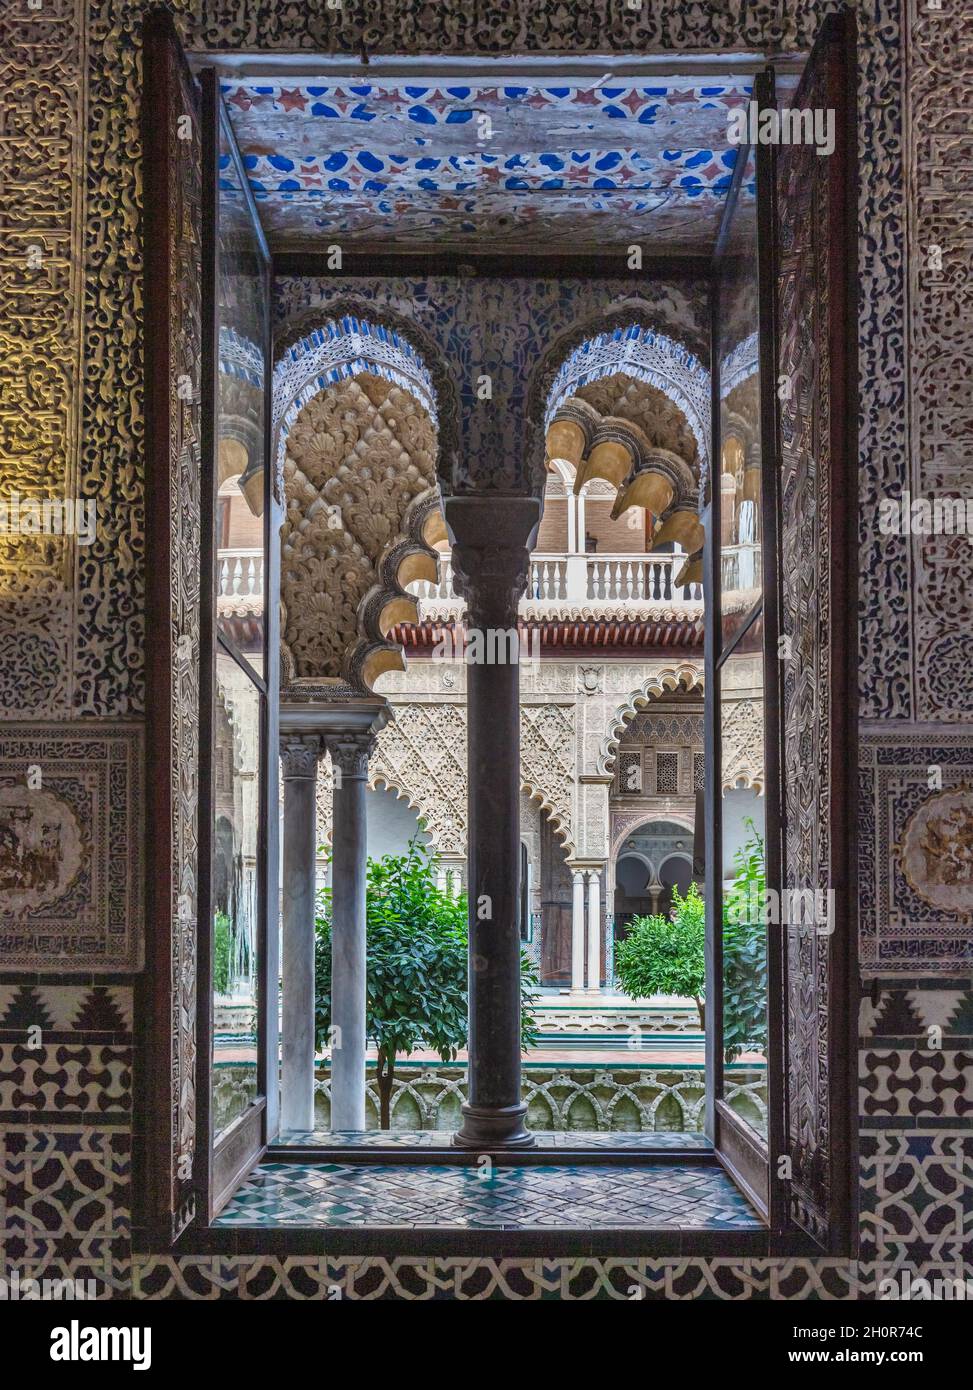 Patio de las Doncellas courtyard. The Reak Alcazar in Sevill, Spain. Stock Photo